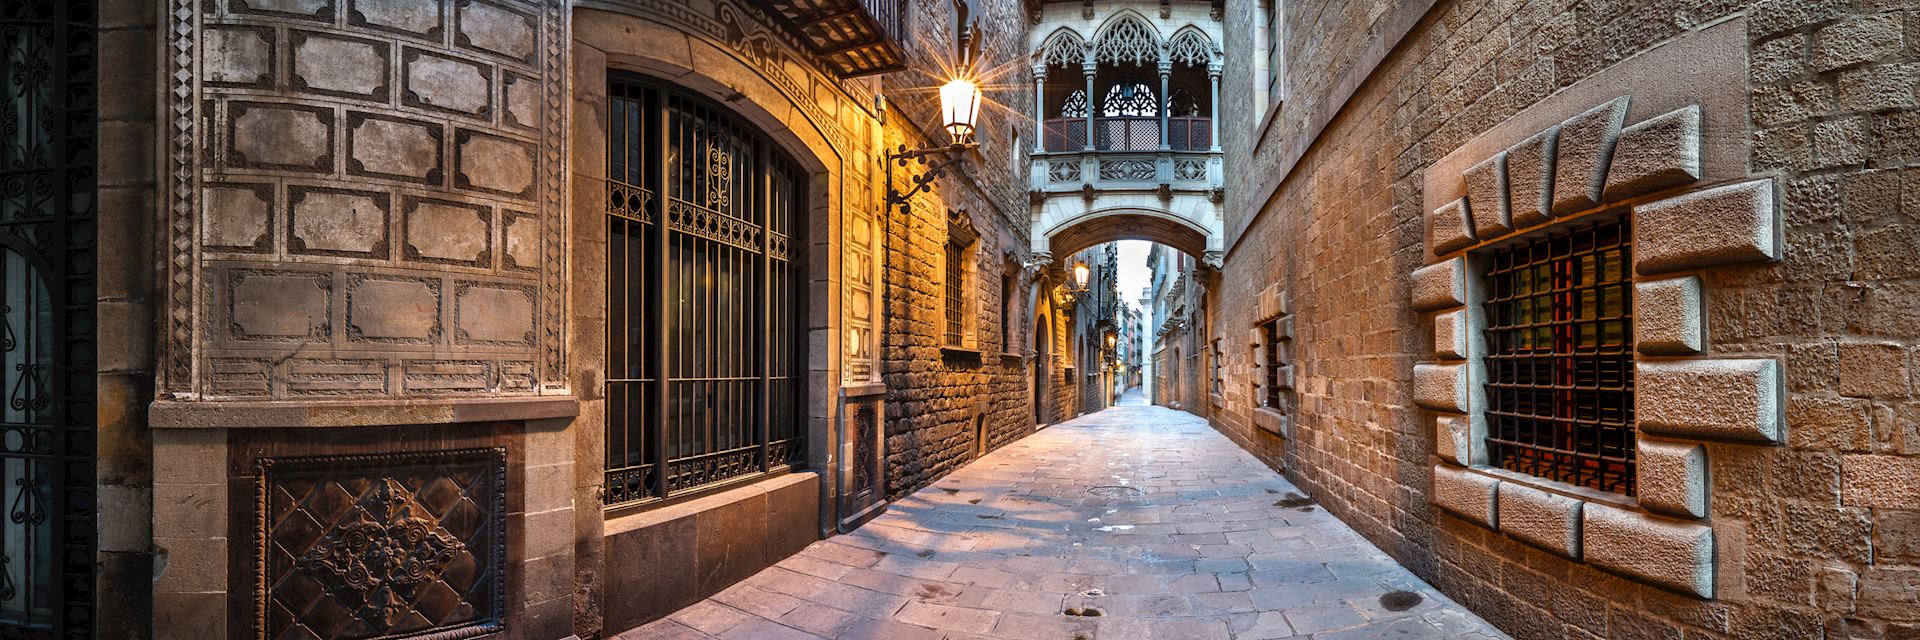 Buildings in Barcelona's Gothic Quarter